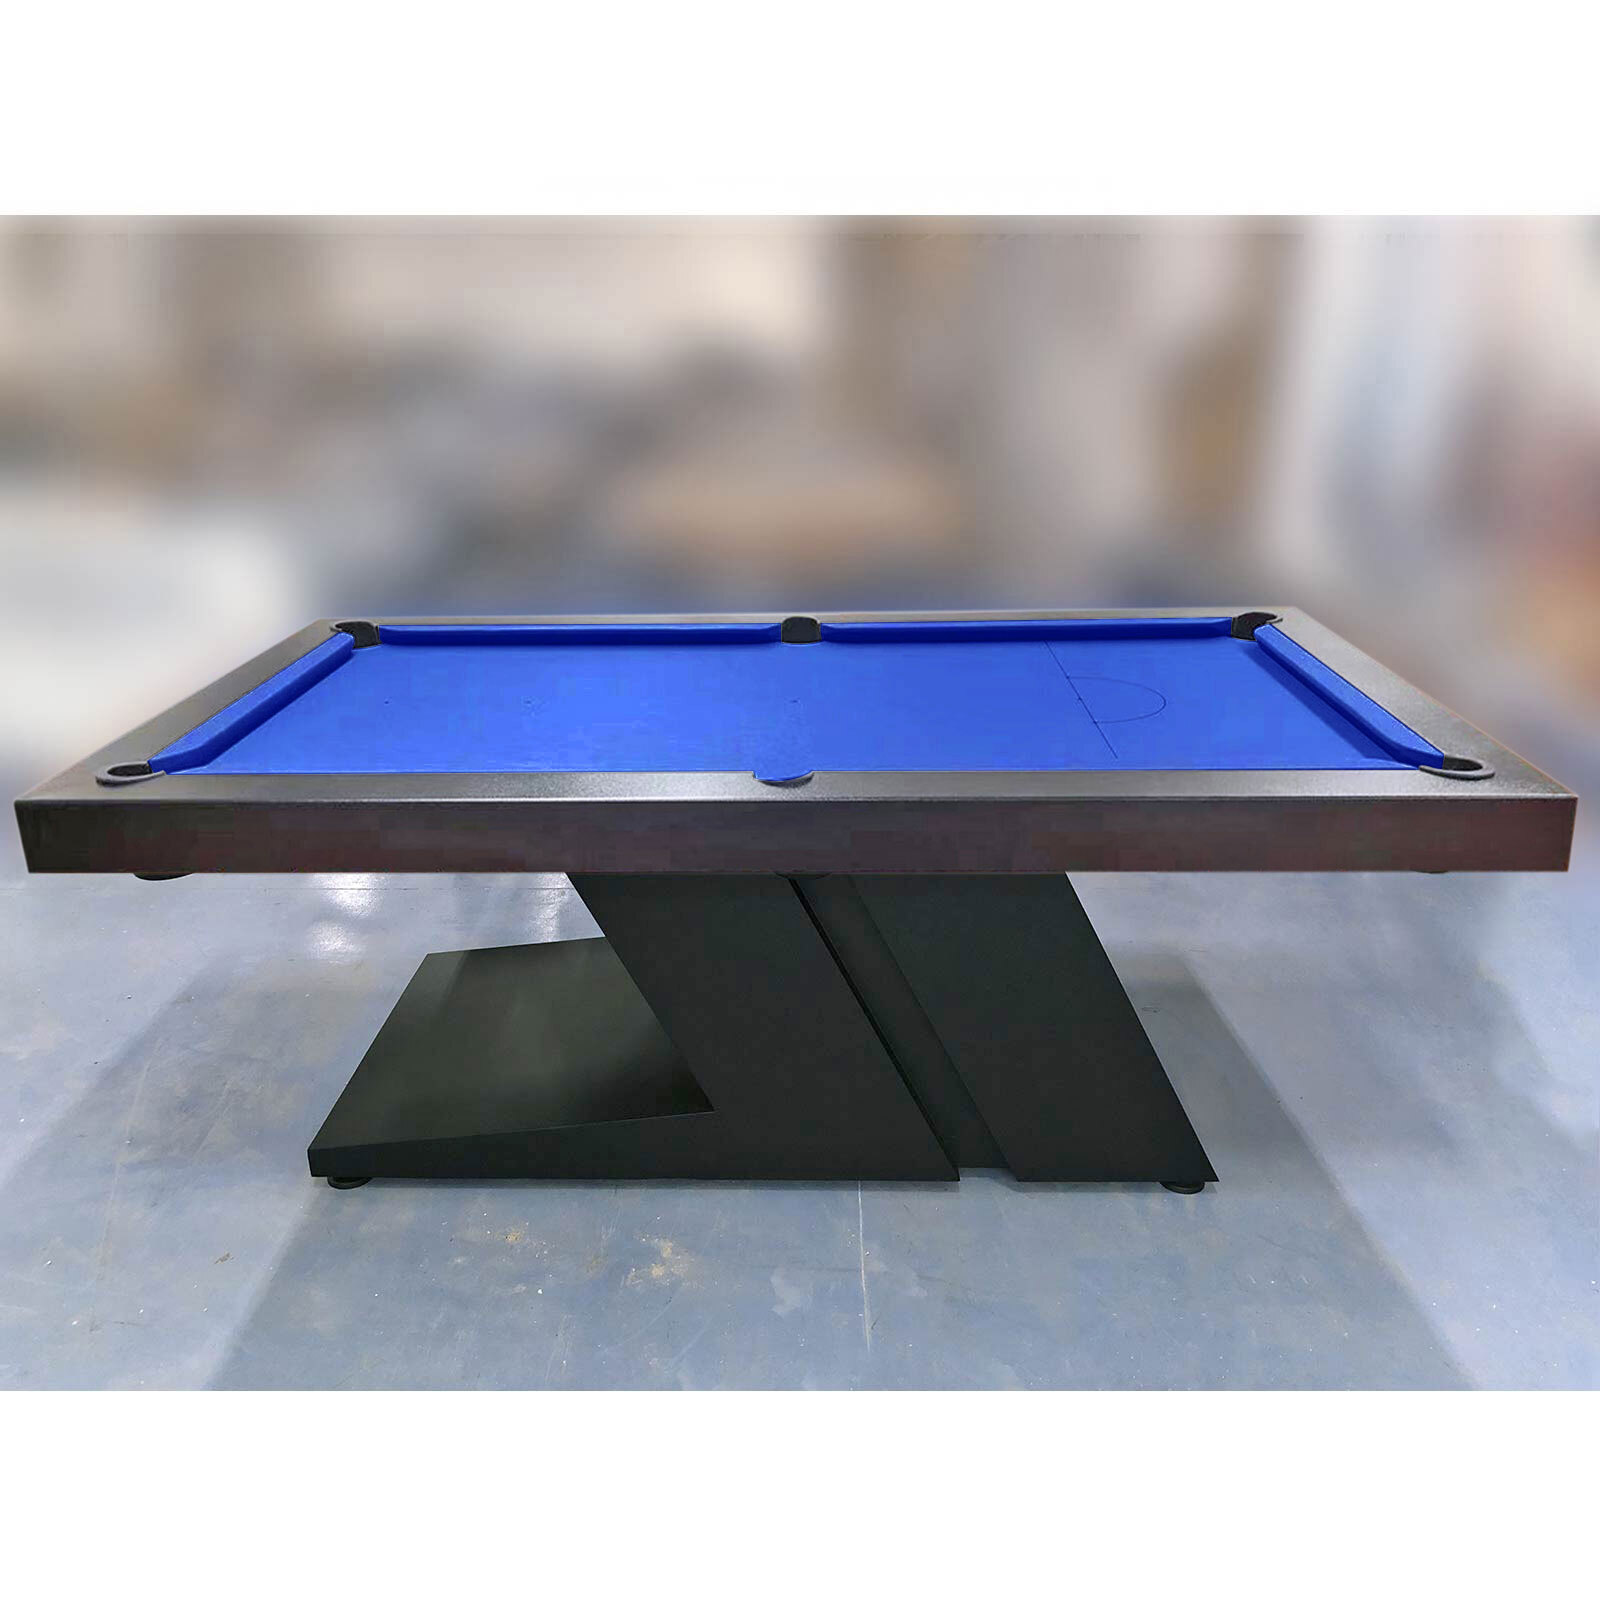 8 Foot Slate CyberPool Outdoor Billiards Table